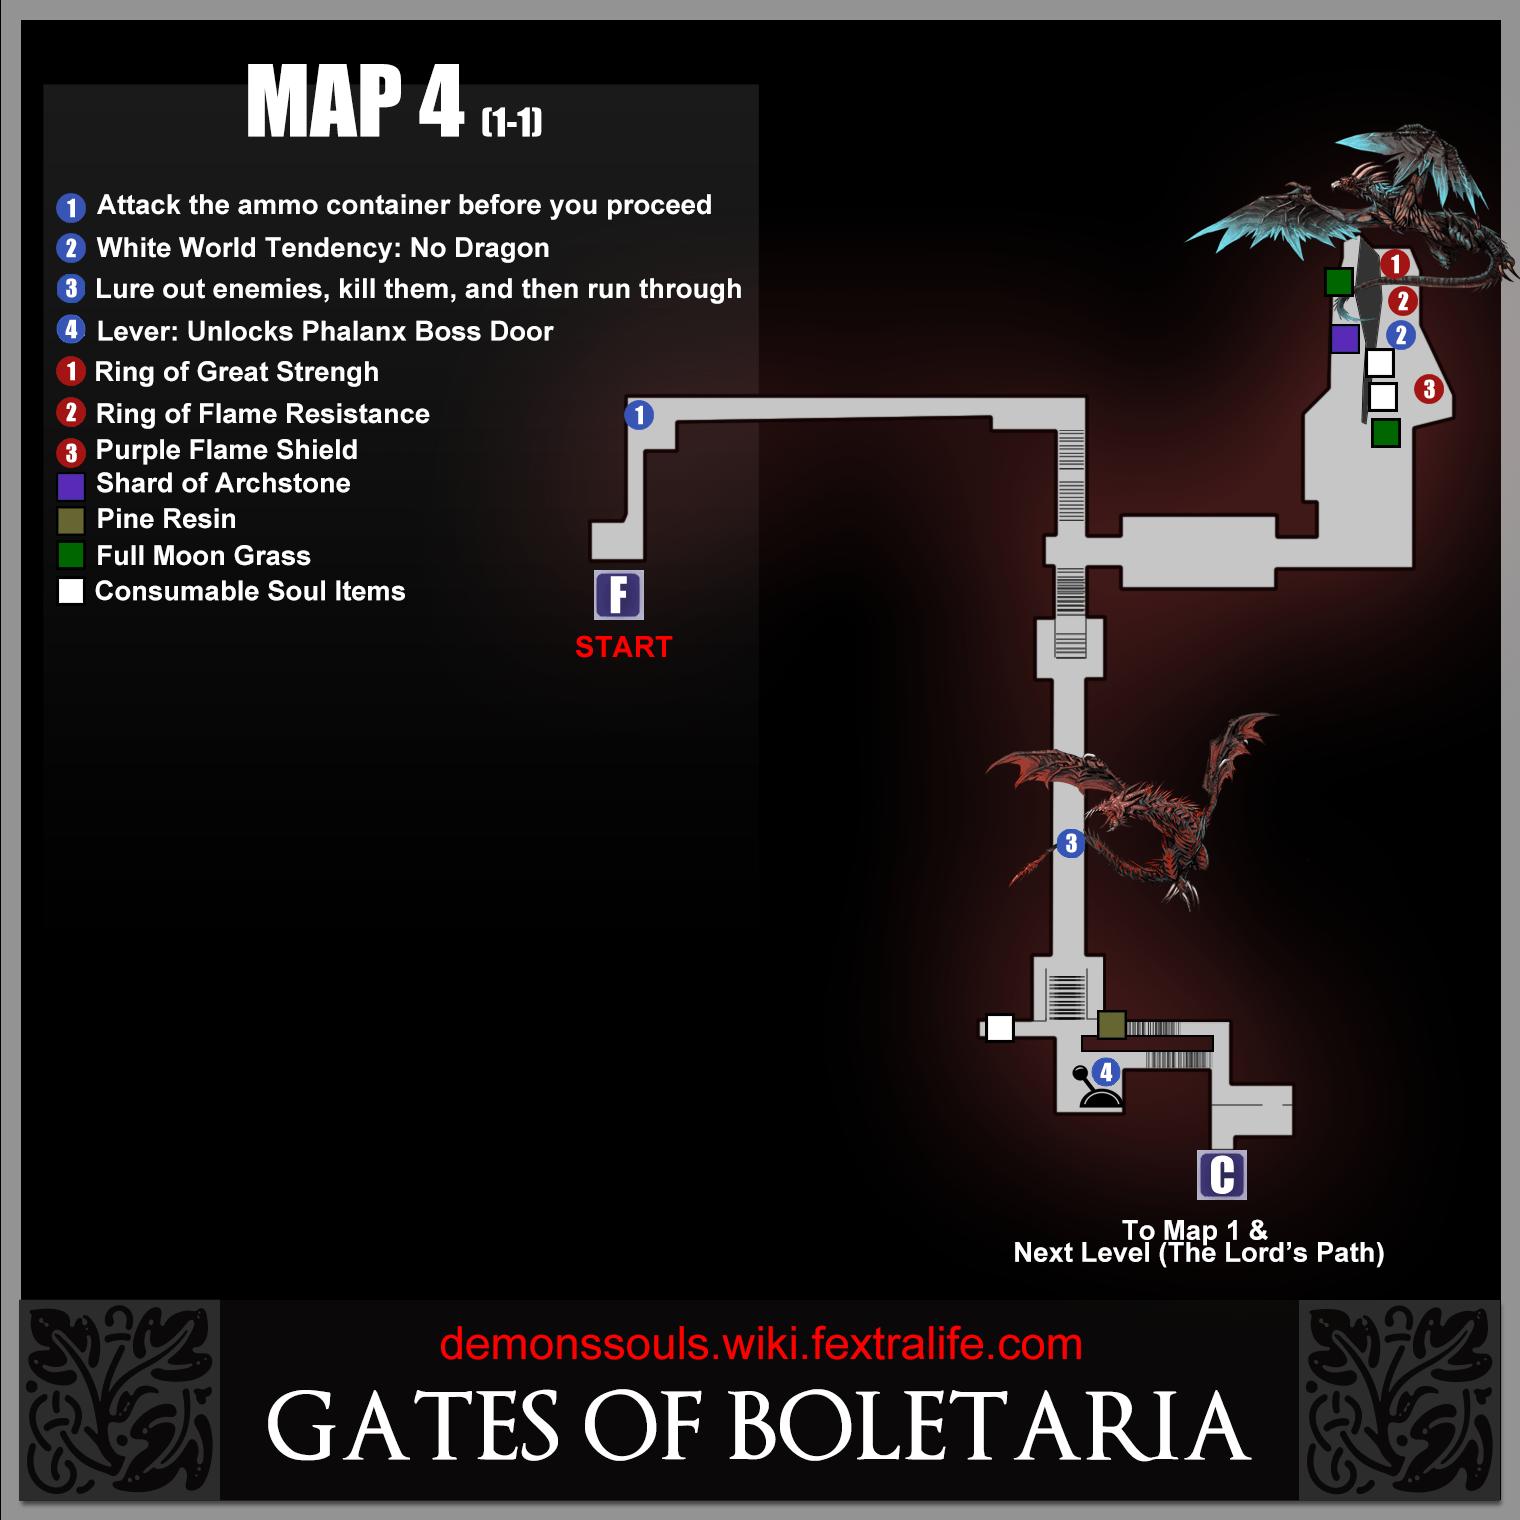 Boletaria, Demon's Souls Wiki